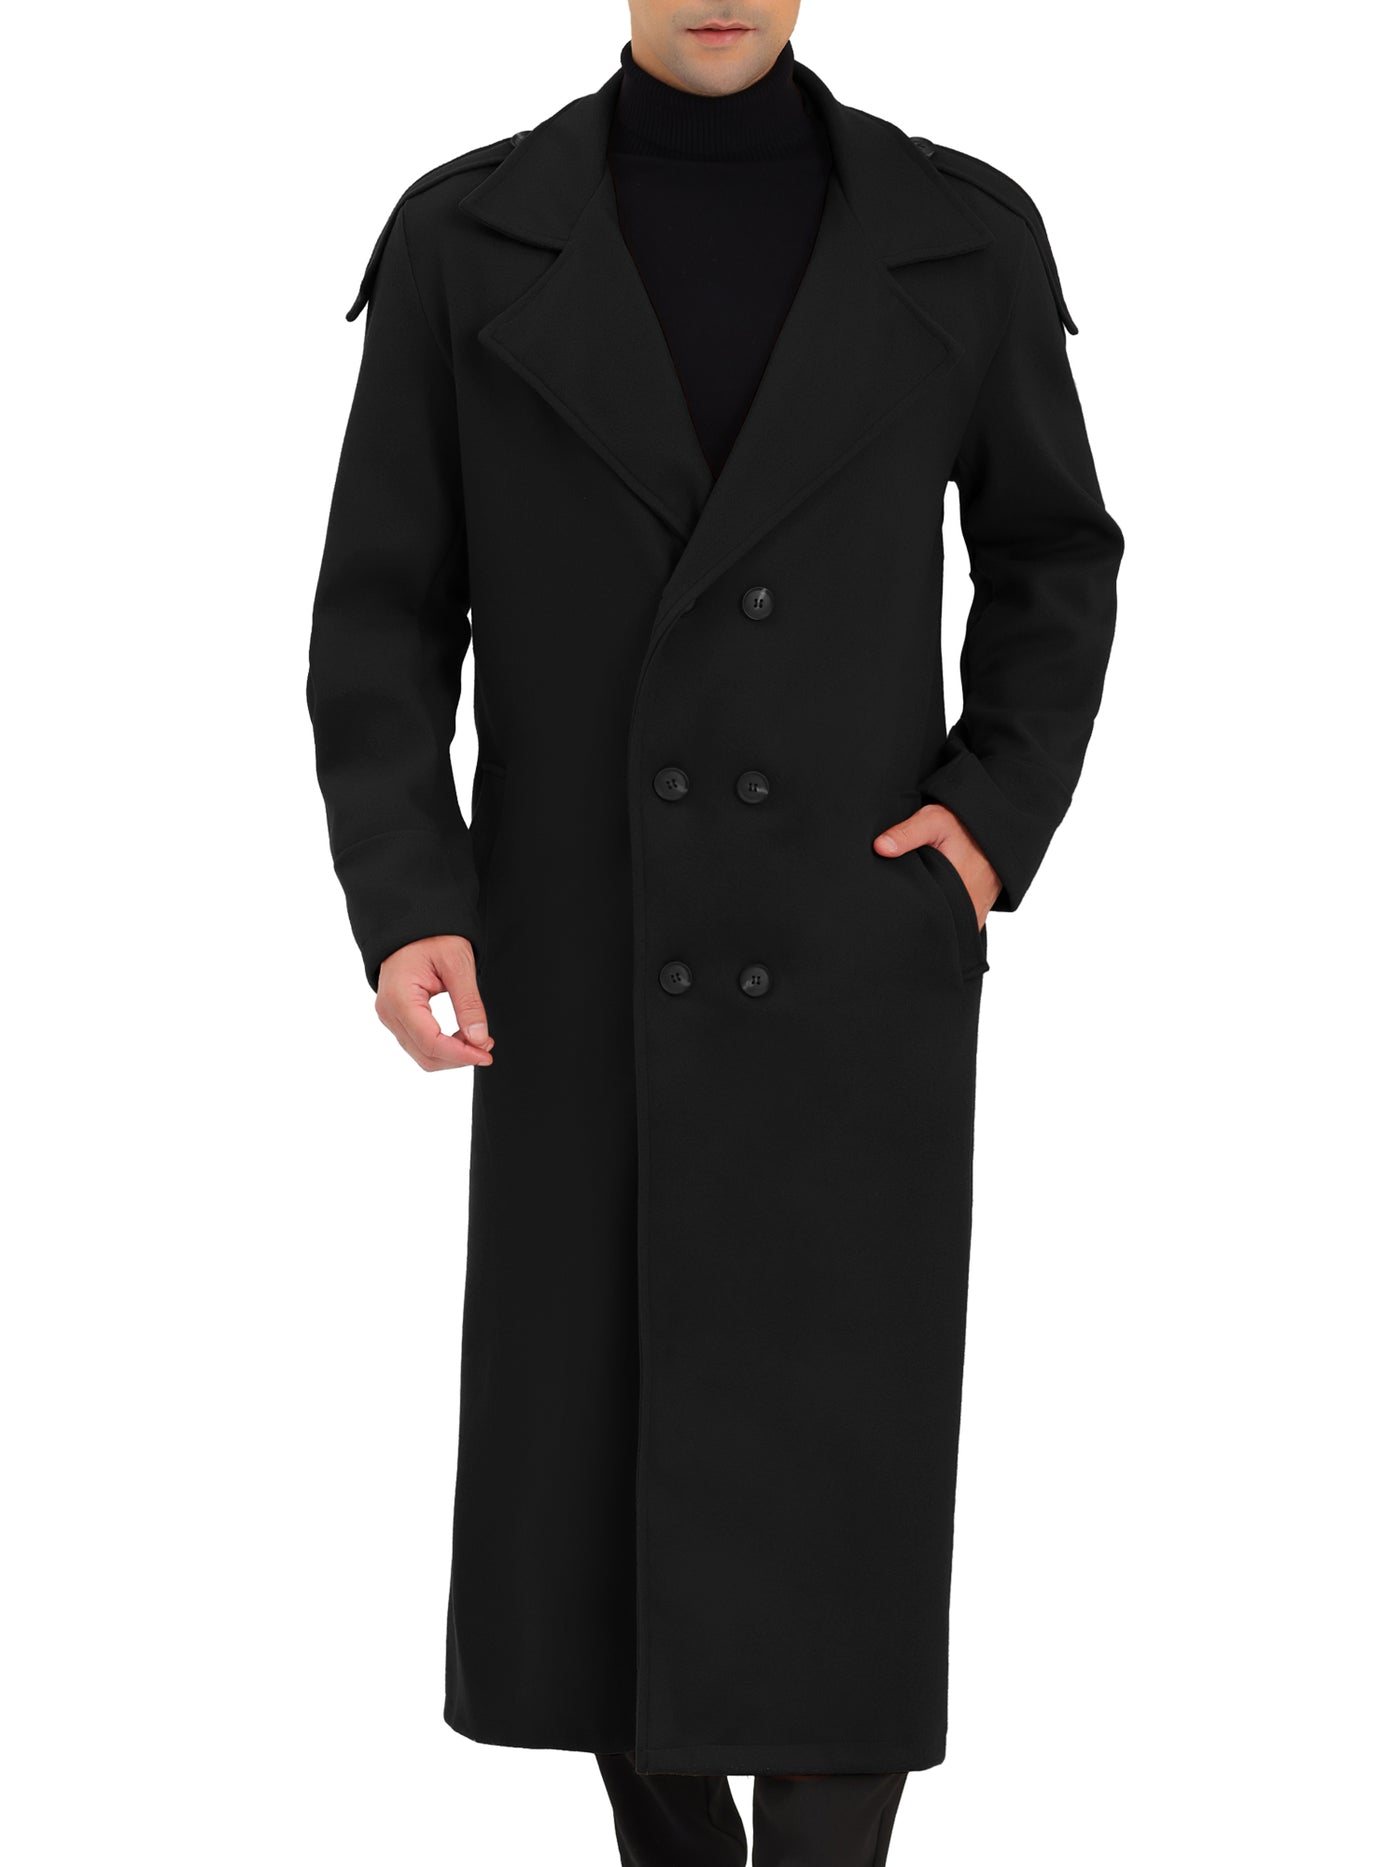 Bublédon Men's Winter Pea Coat Notch Lapel Double Breasted Solid Color Overcoat